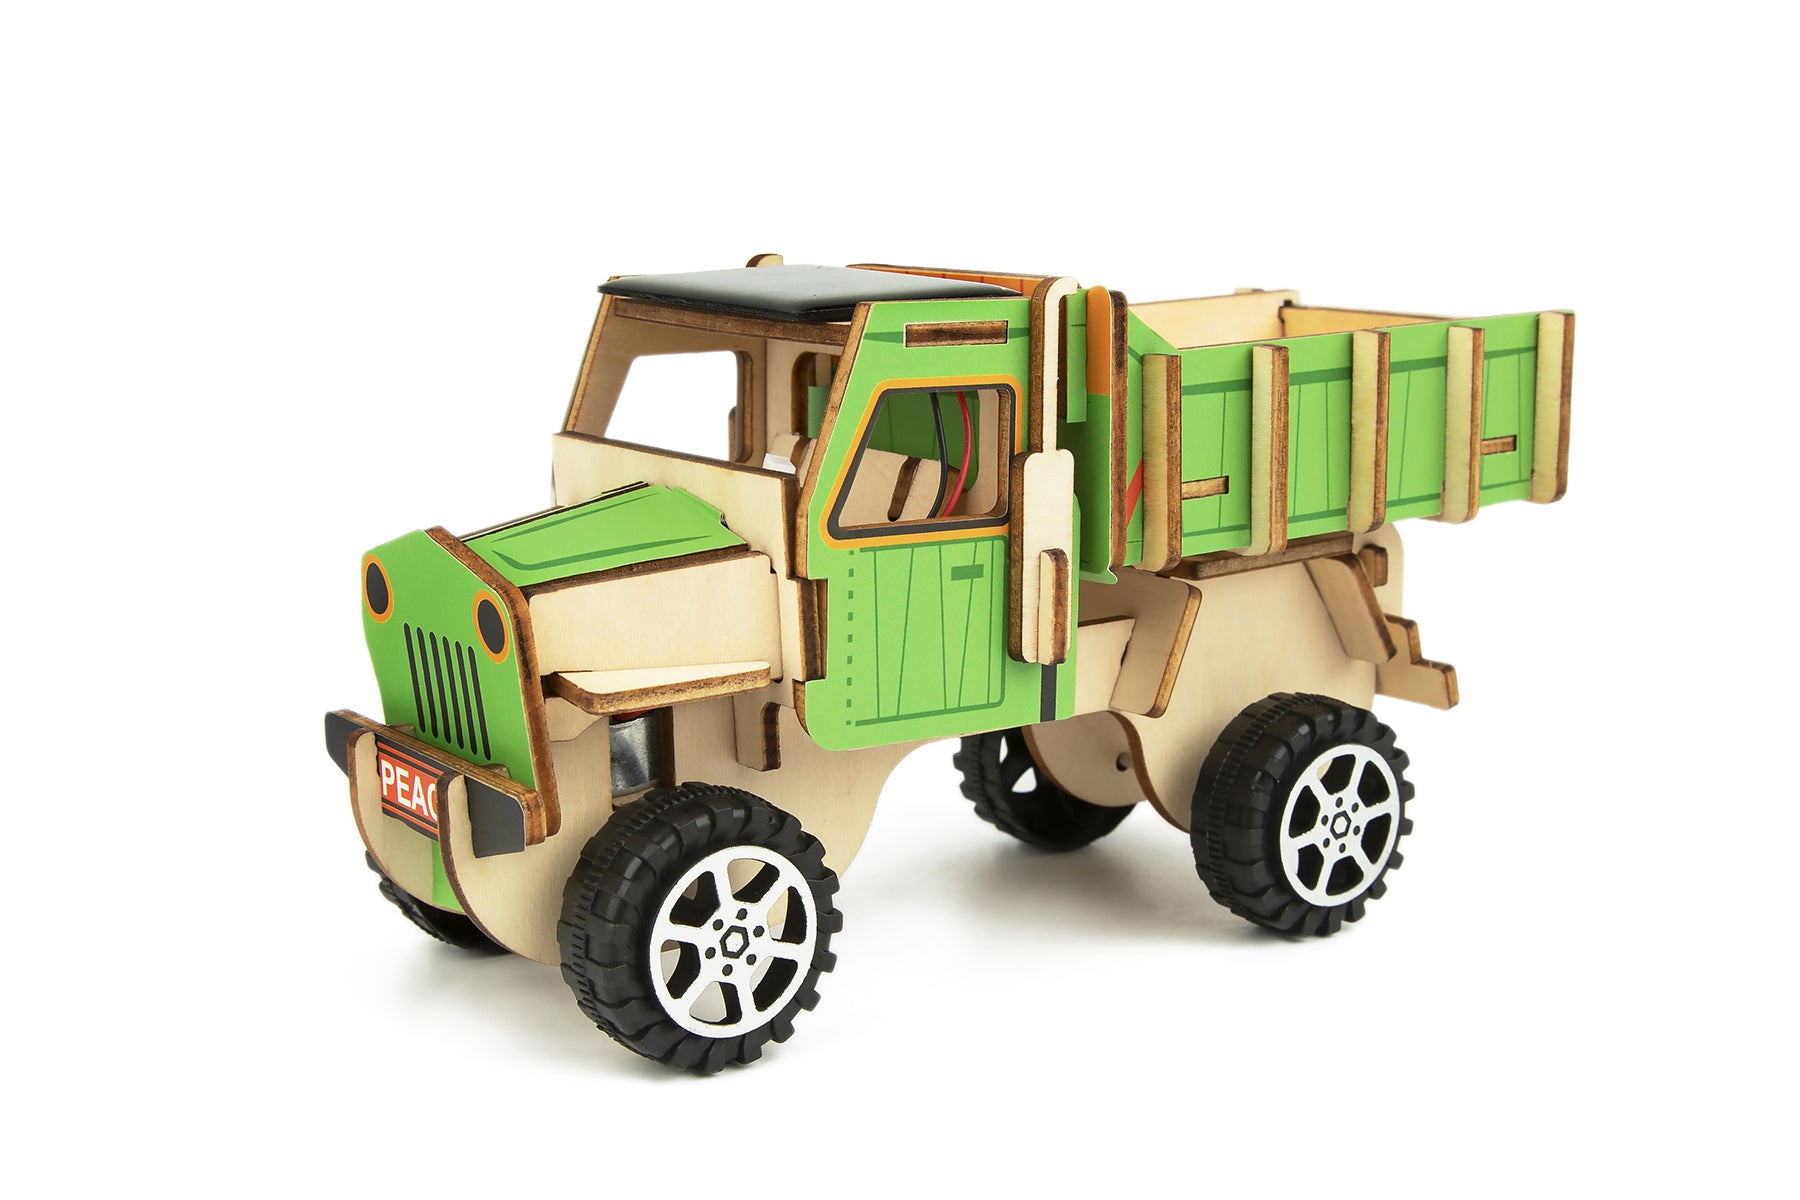 Tookyland / DIY 3D Wooden Cars (Solar Craft Kit) - Truck